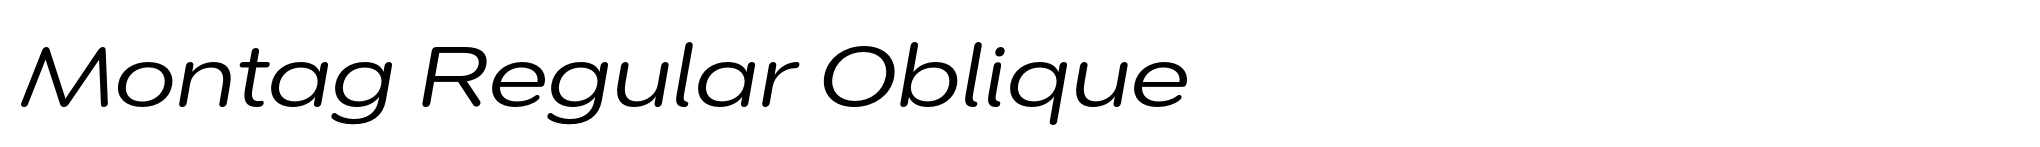 Montag Regular Oblique image